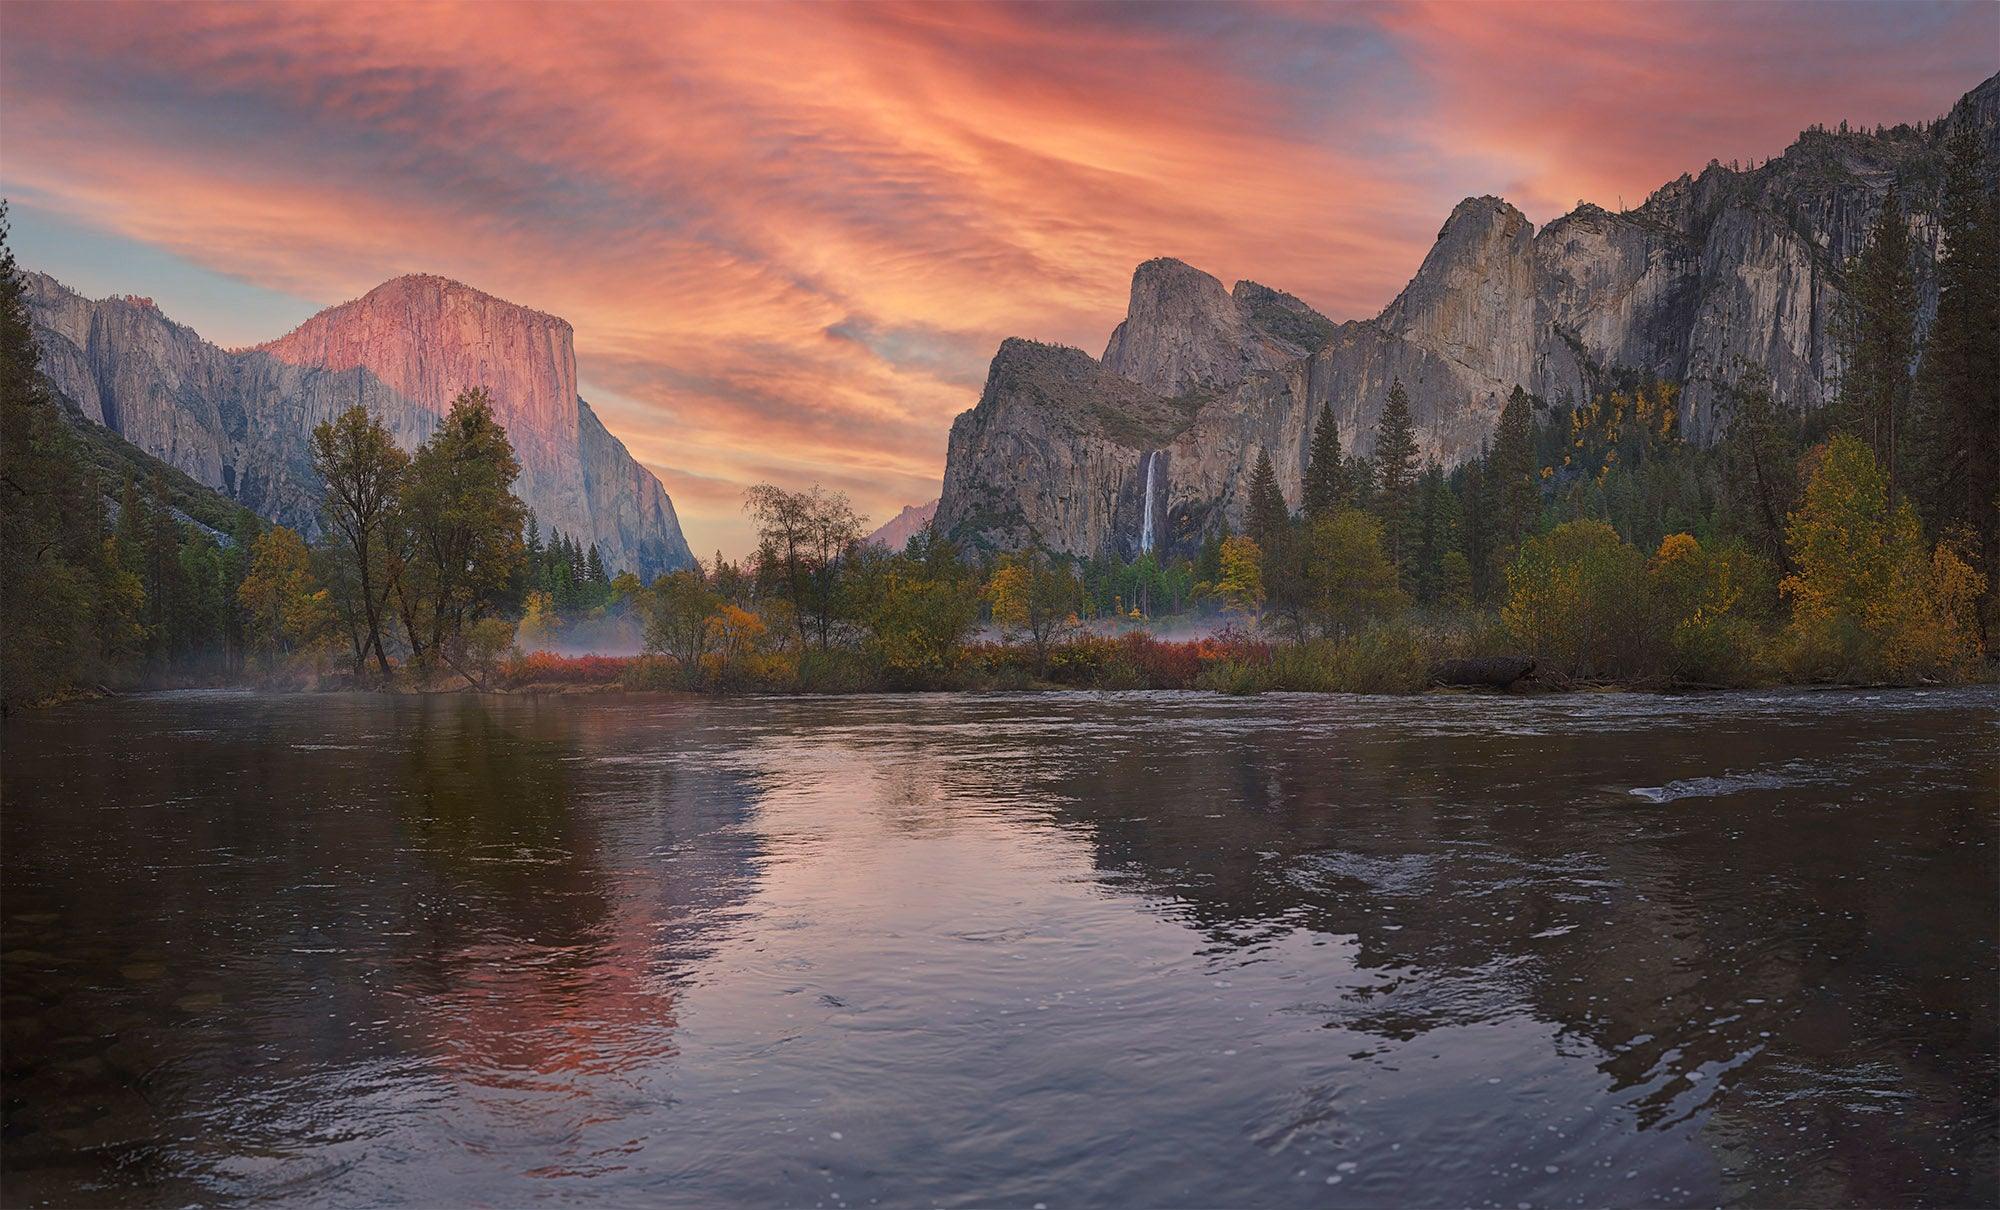 CoolWalls.ca Background Yosemite El Capitan Sunset over the river image, High resolution GigaPixel Image